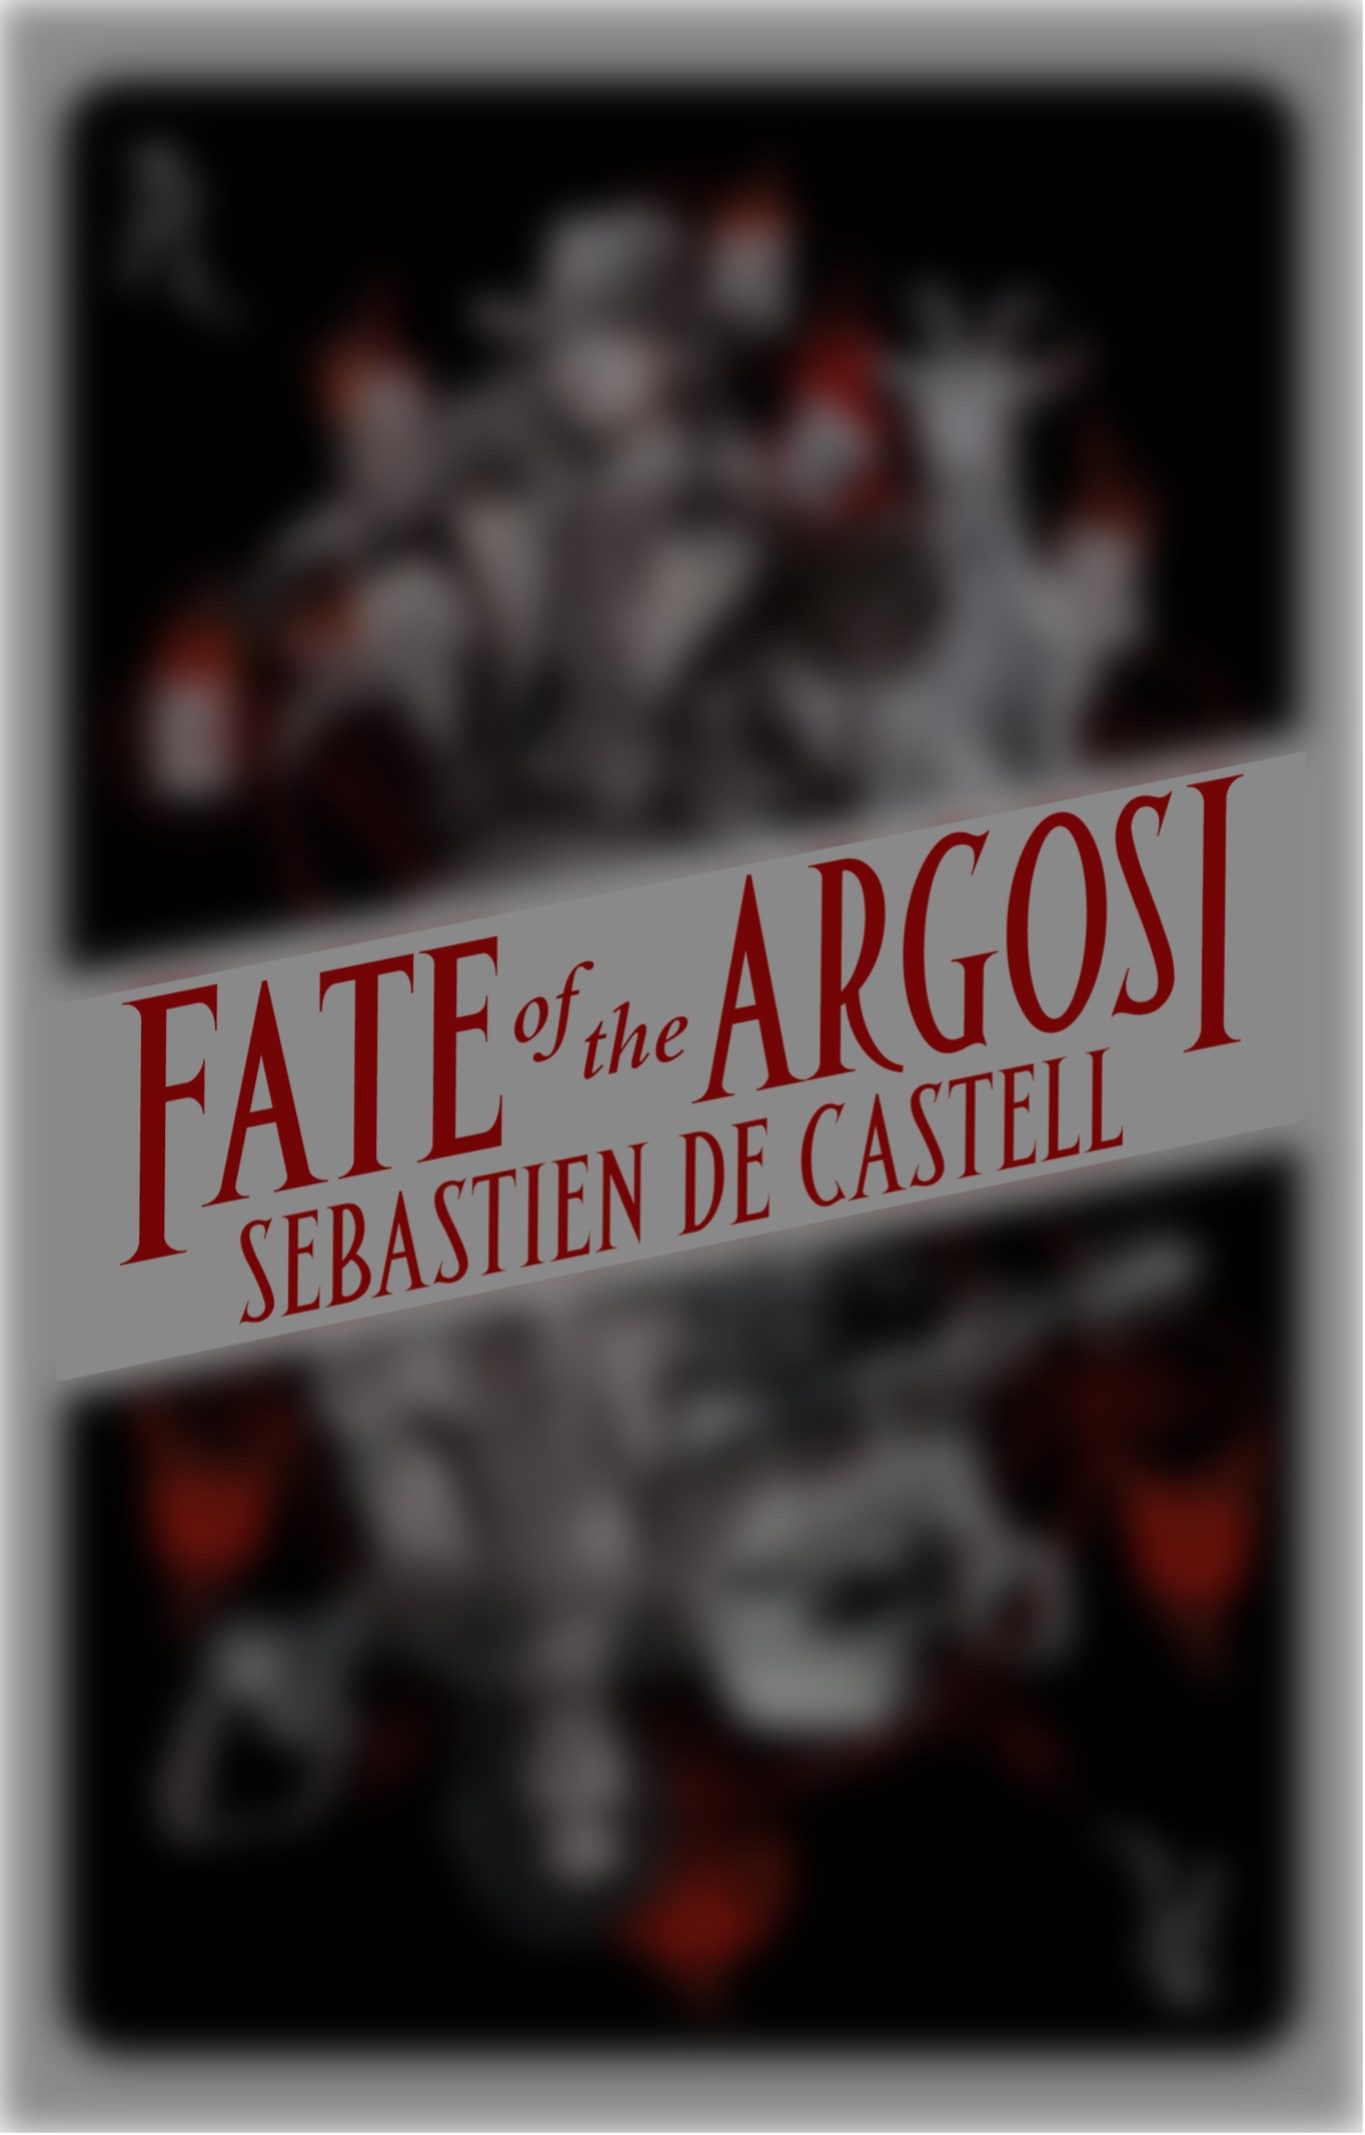 Writing Fate of the Castell Sebastien Argosi | de